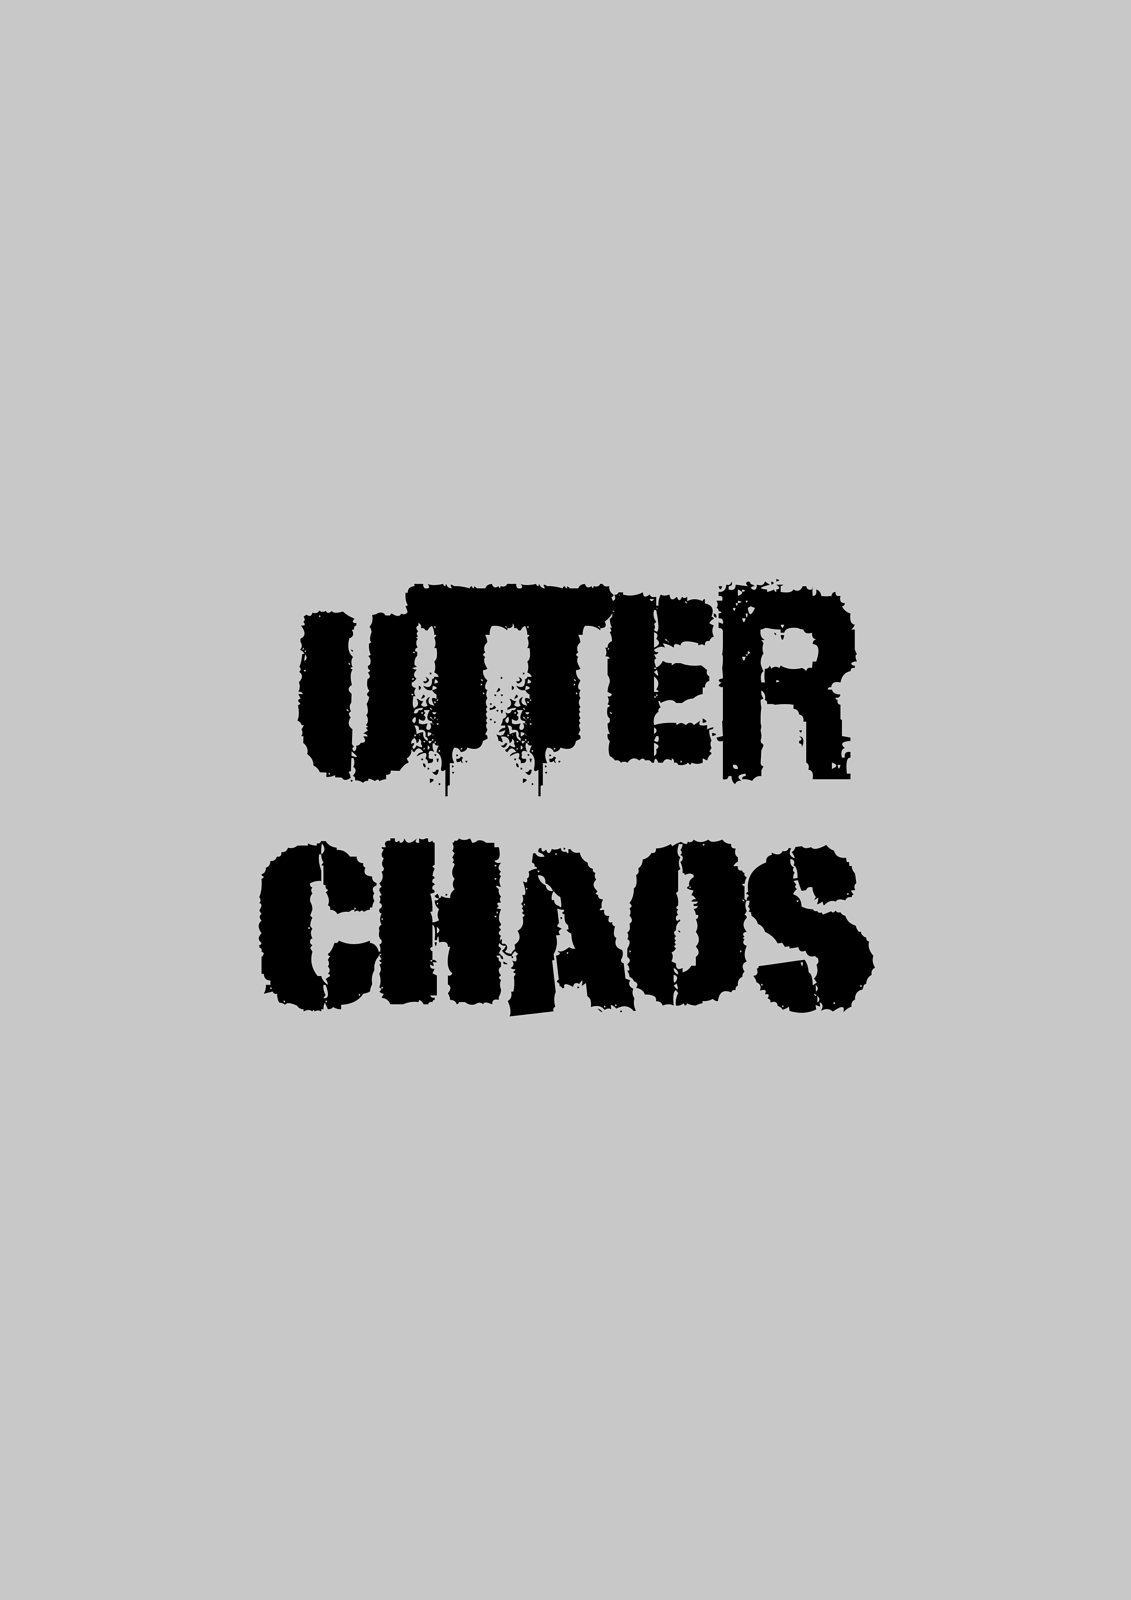 Utter chaos